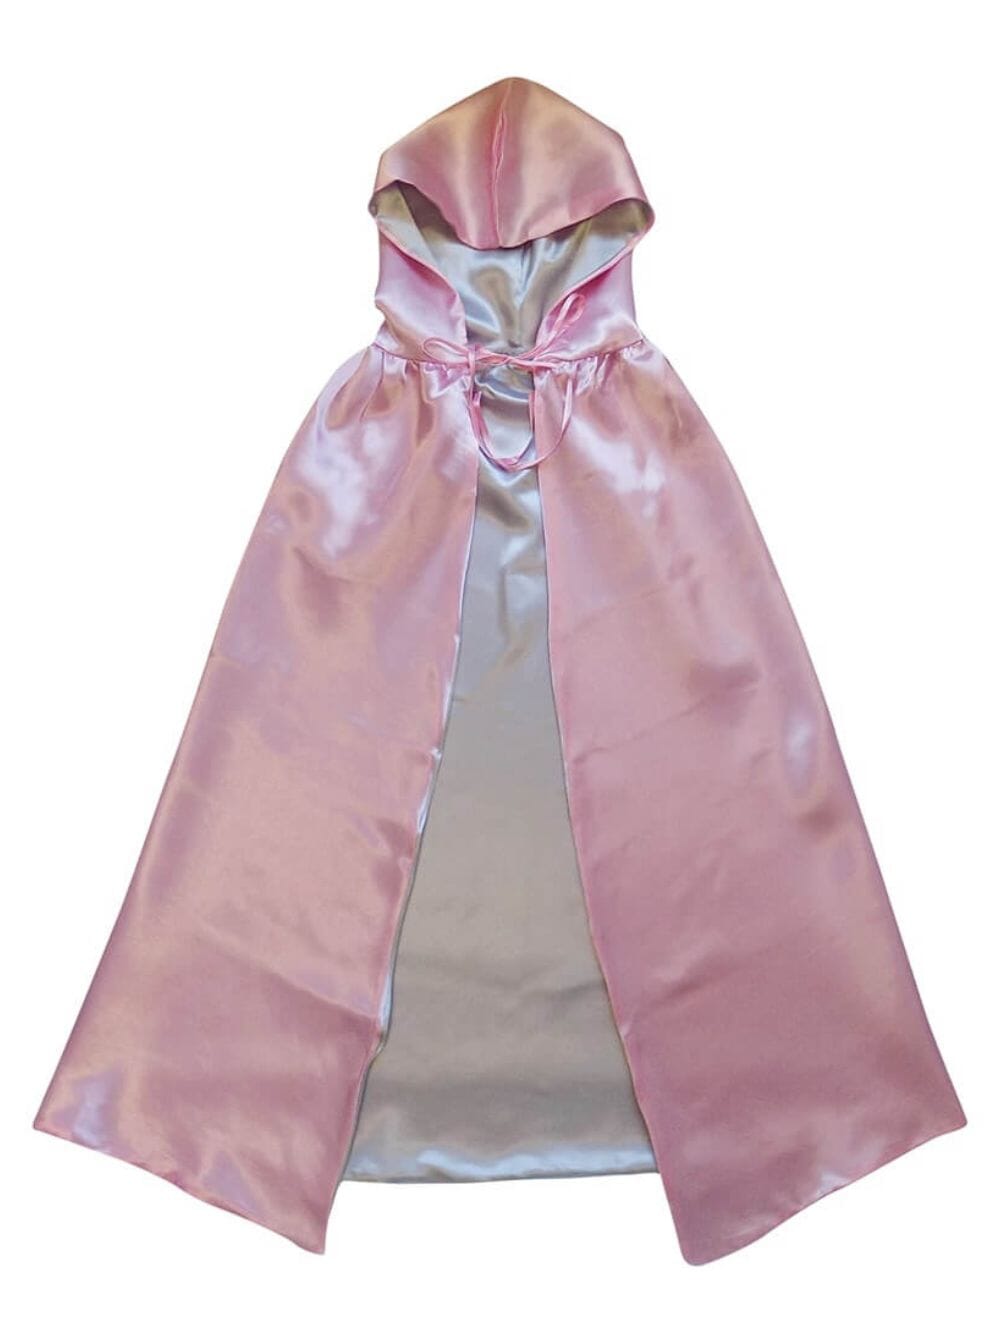 Pink & Silver Hooded Cape, Superhero or Princess Reversible Hooded Cloak - Sydney So Sweet